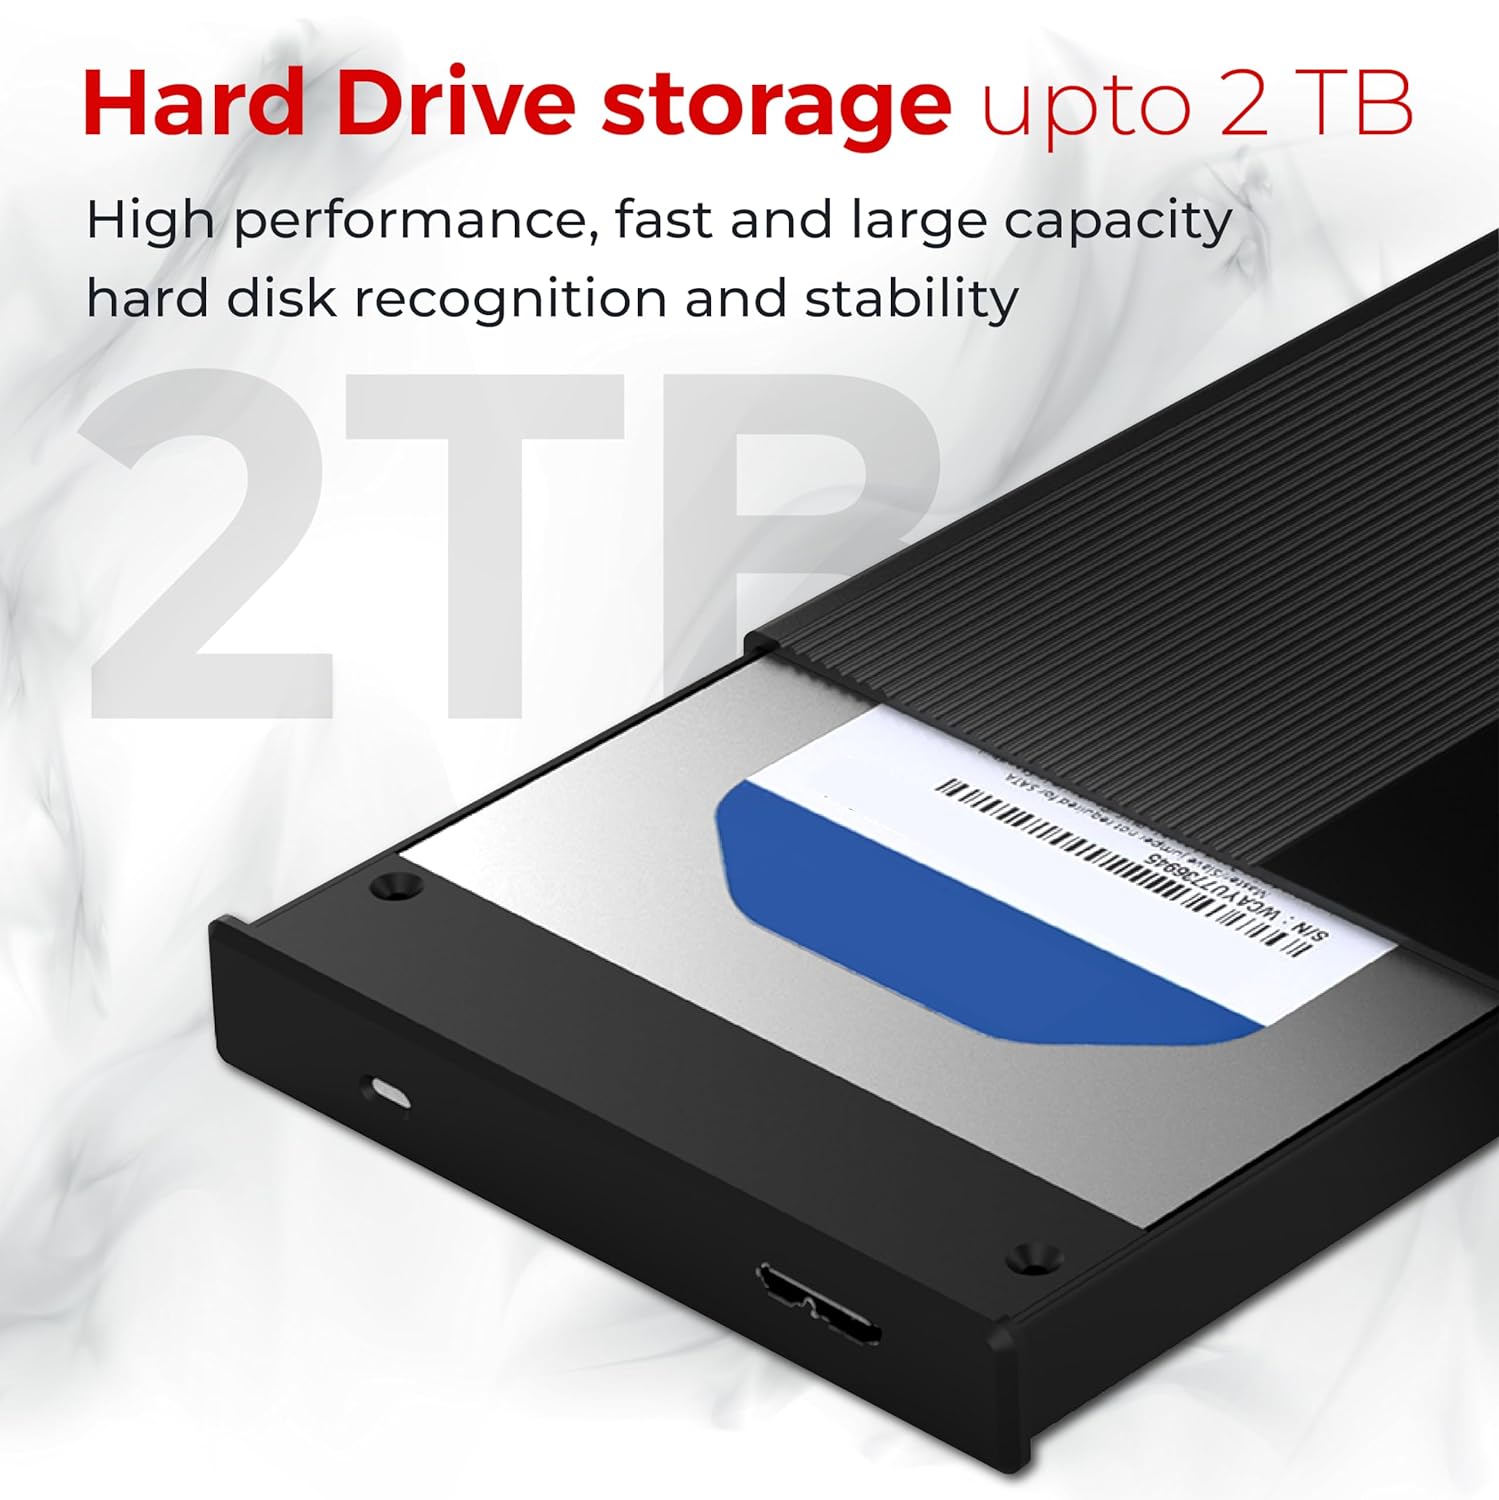 SUHSAI External Hard Drive 500GB USB 3.0 Portable Hard Disk Storage & Memory Expansion HDD, Backup External Hard Drive for Laptop Computer, MacBook, and Desktop (Navy Blue)